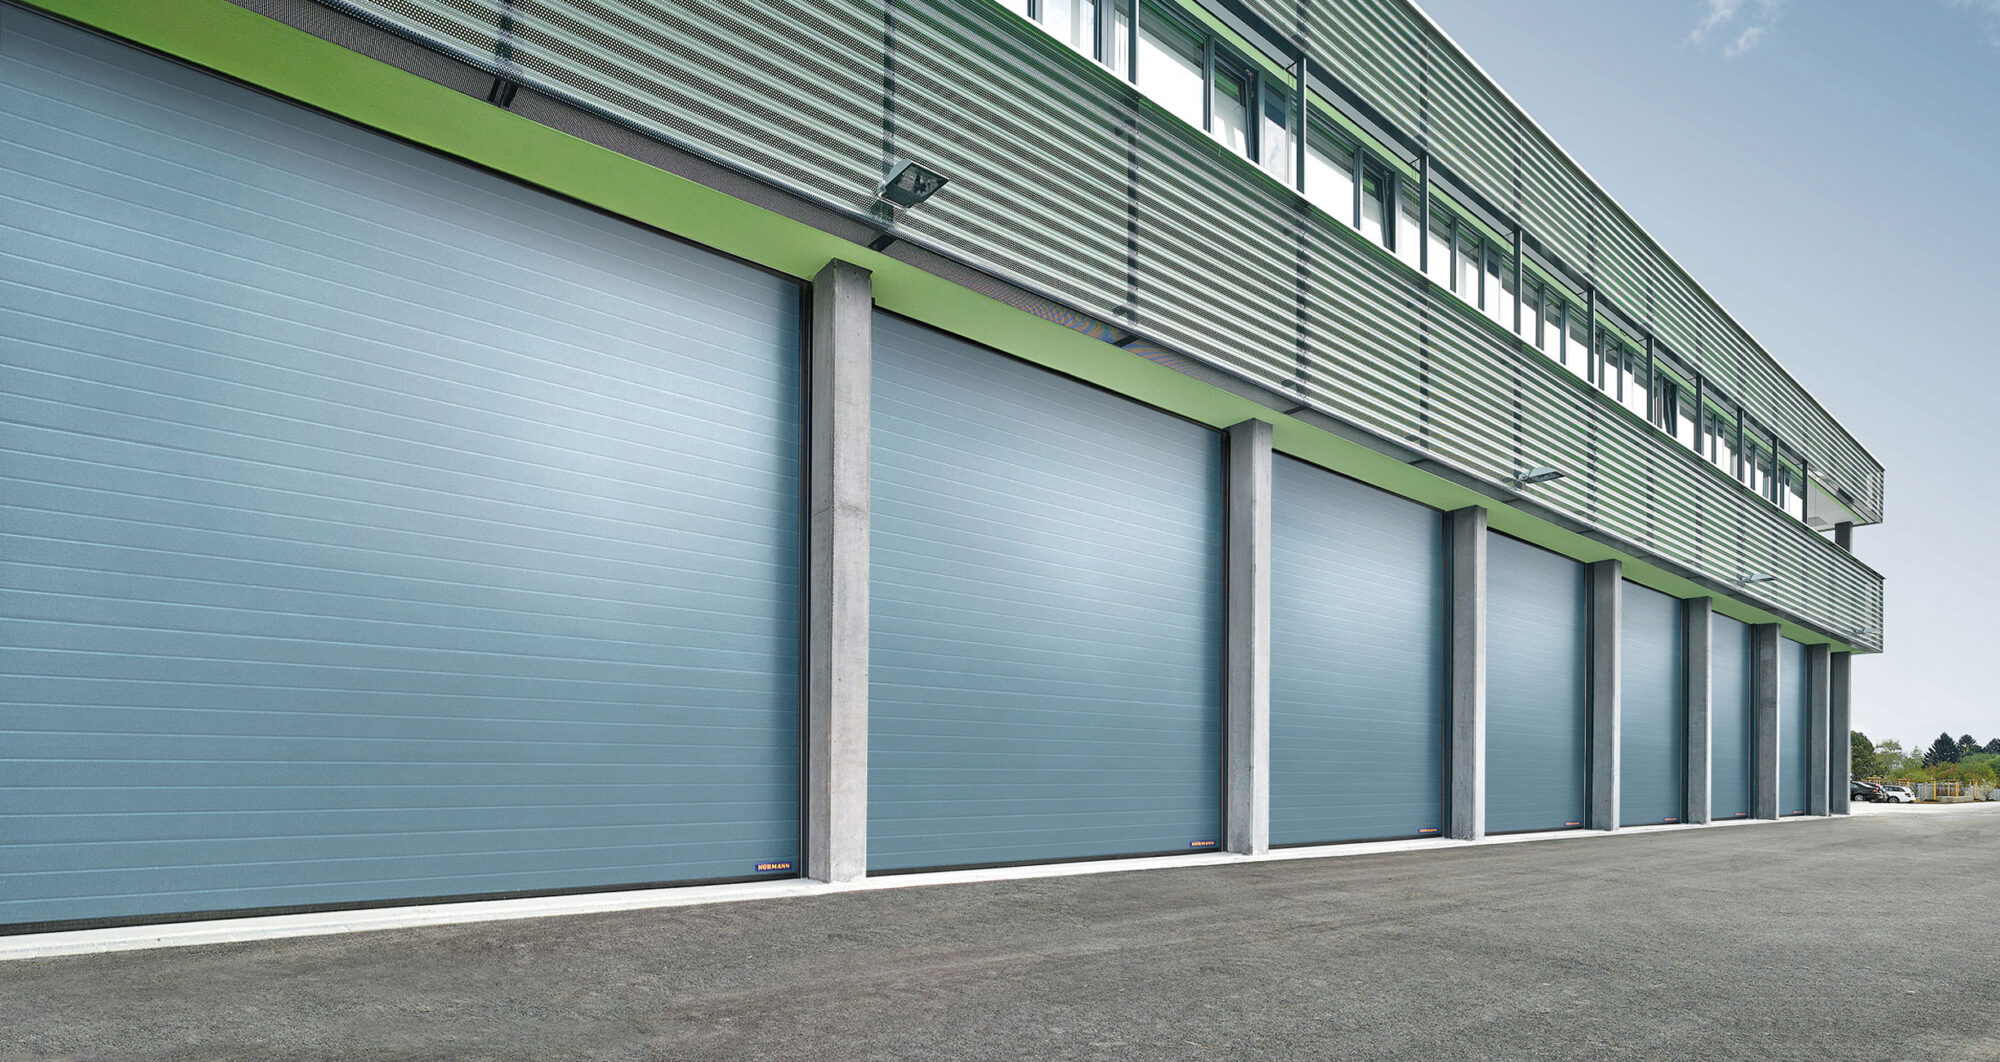 Residential & Commercial Garage Doors - Hörmann